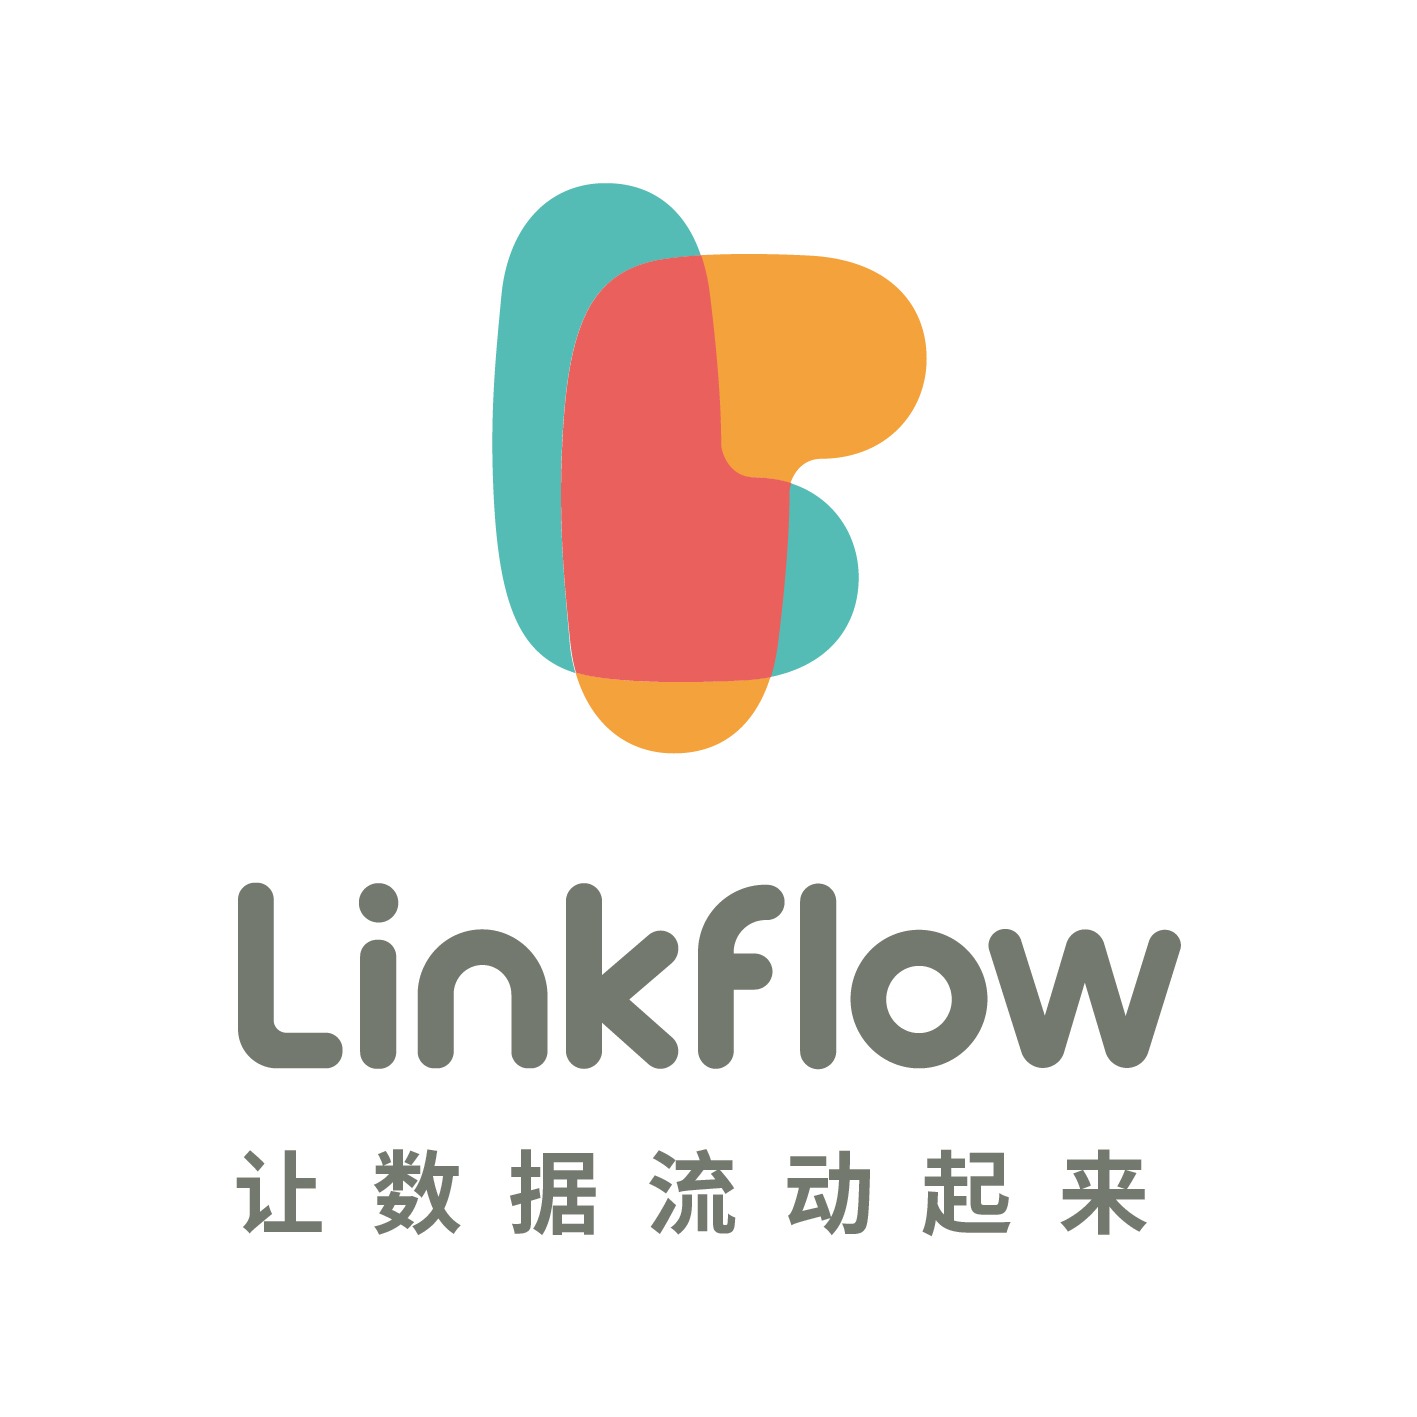 Linkflow，讓企業數據流動起來